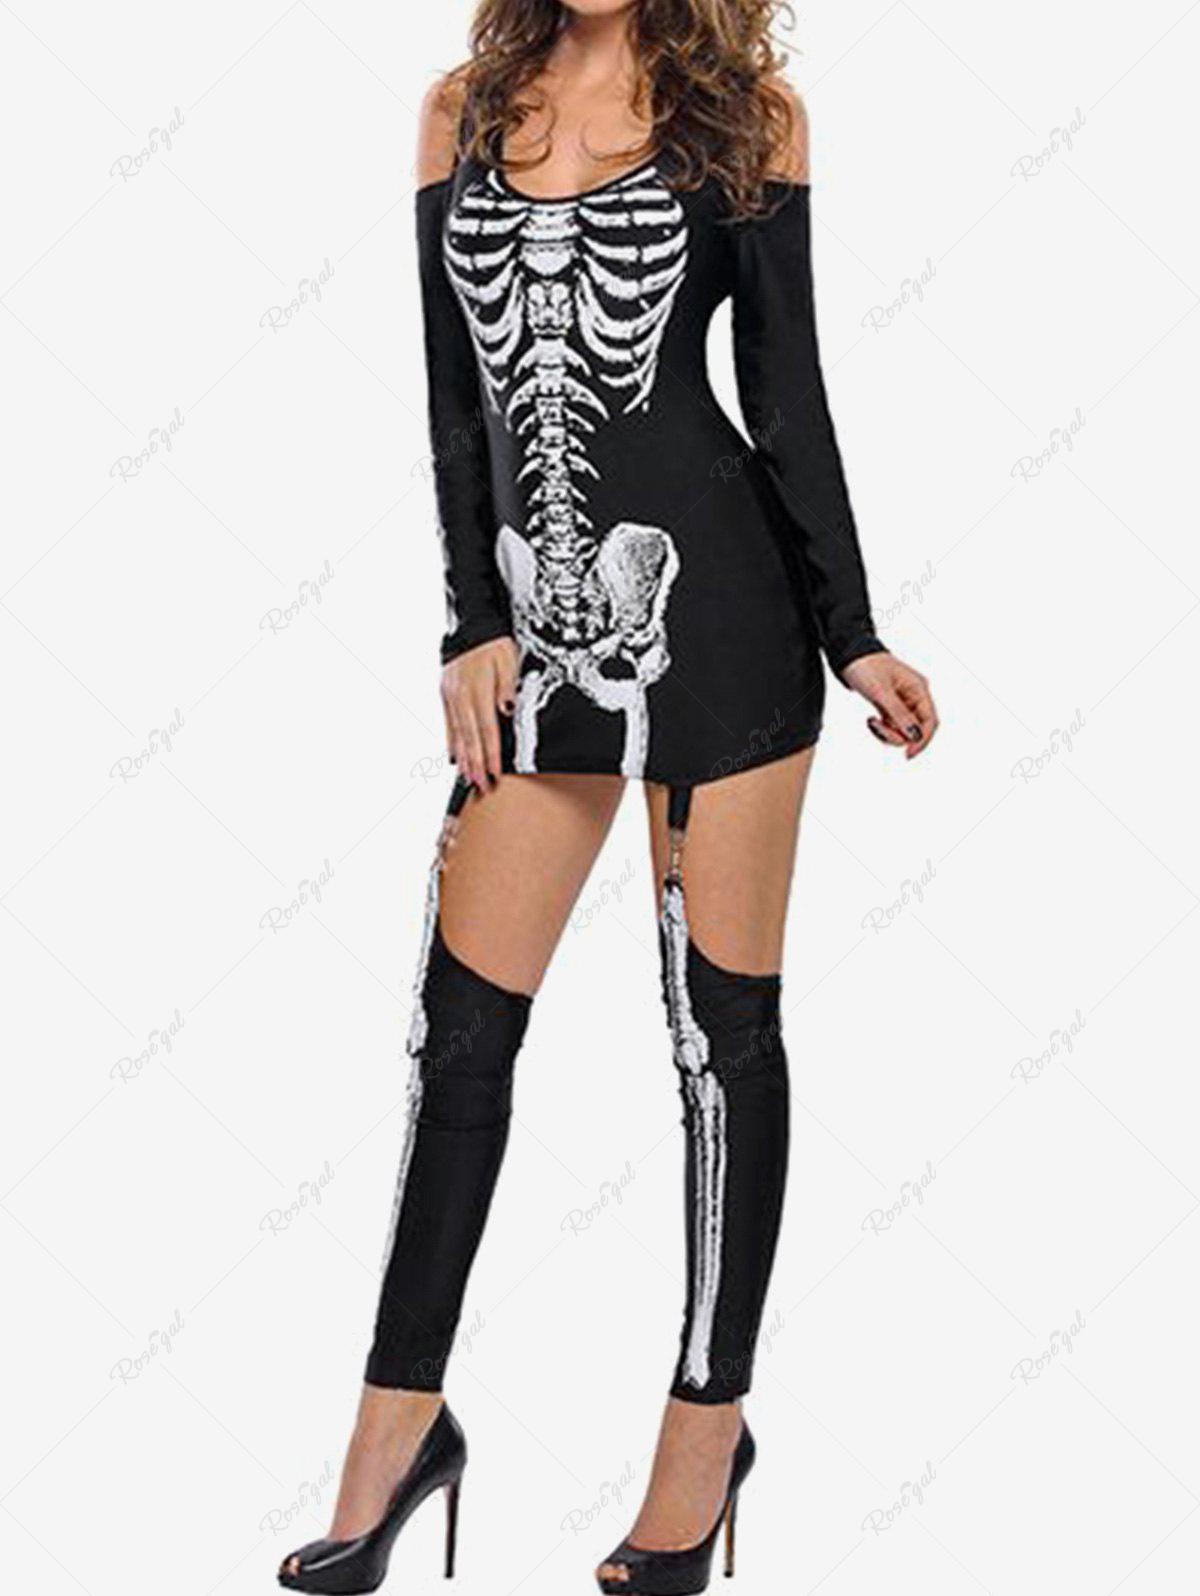 💗Marika Loves💗 Halloween Costume Gothic Cold Shoulder Skeleton Printed Tunic Dress